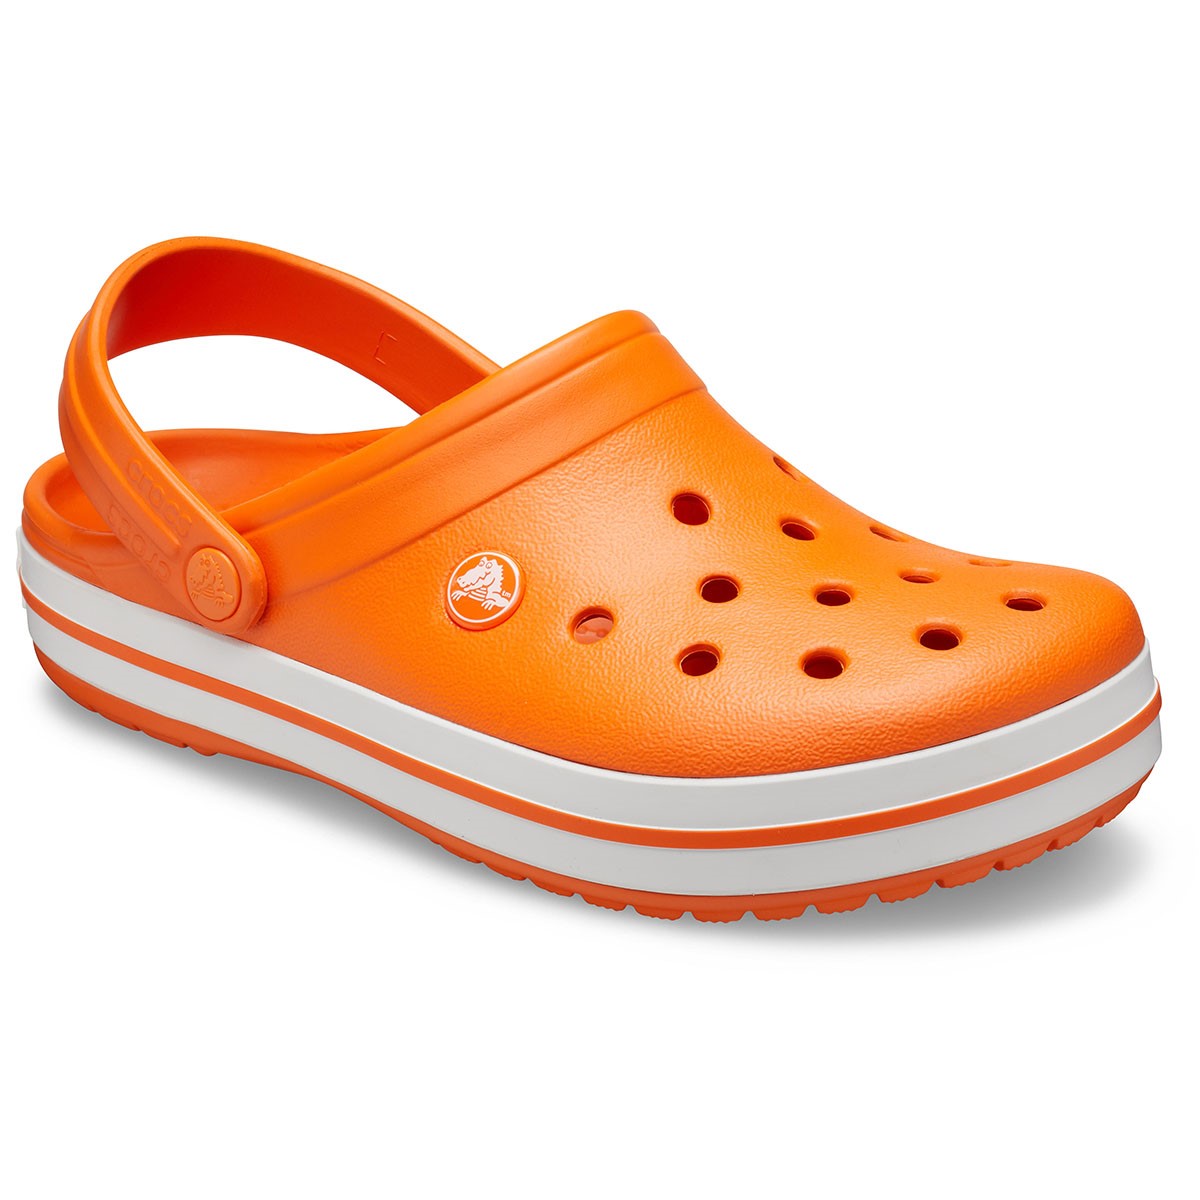 Crocs Unisex Sandalet 11016 Orange/White